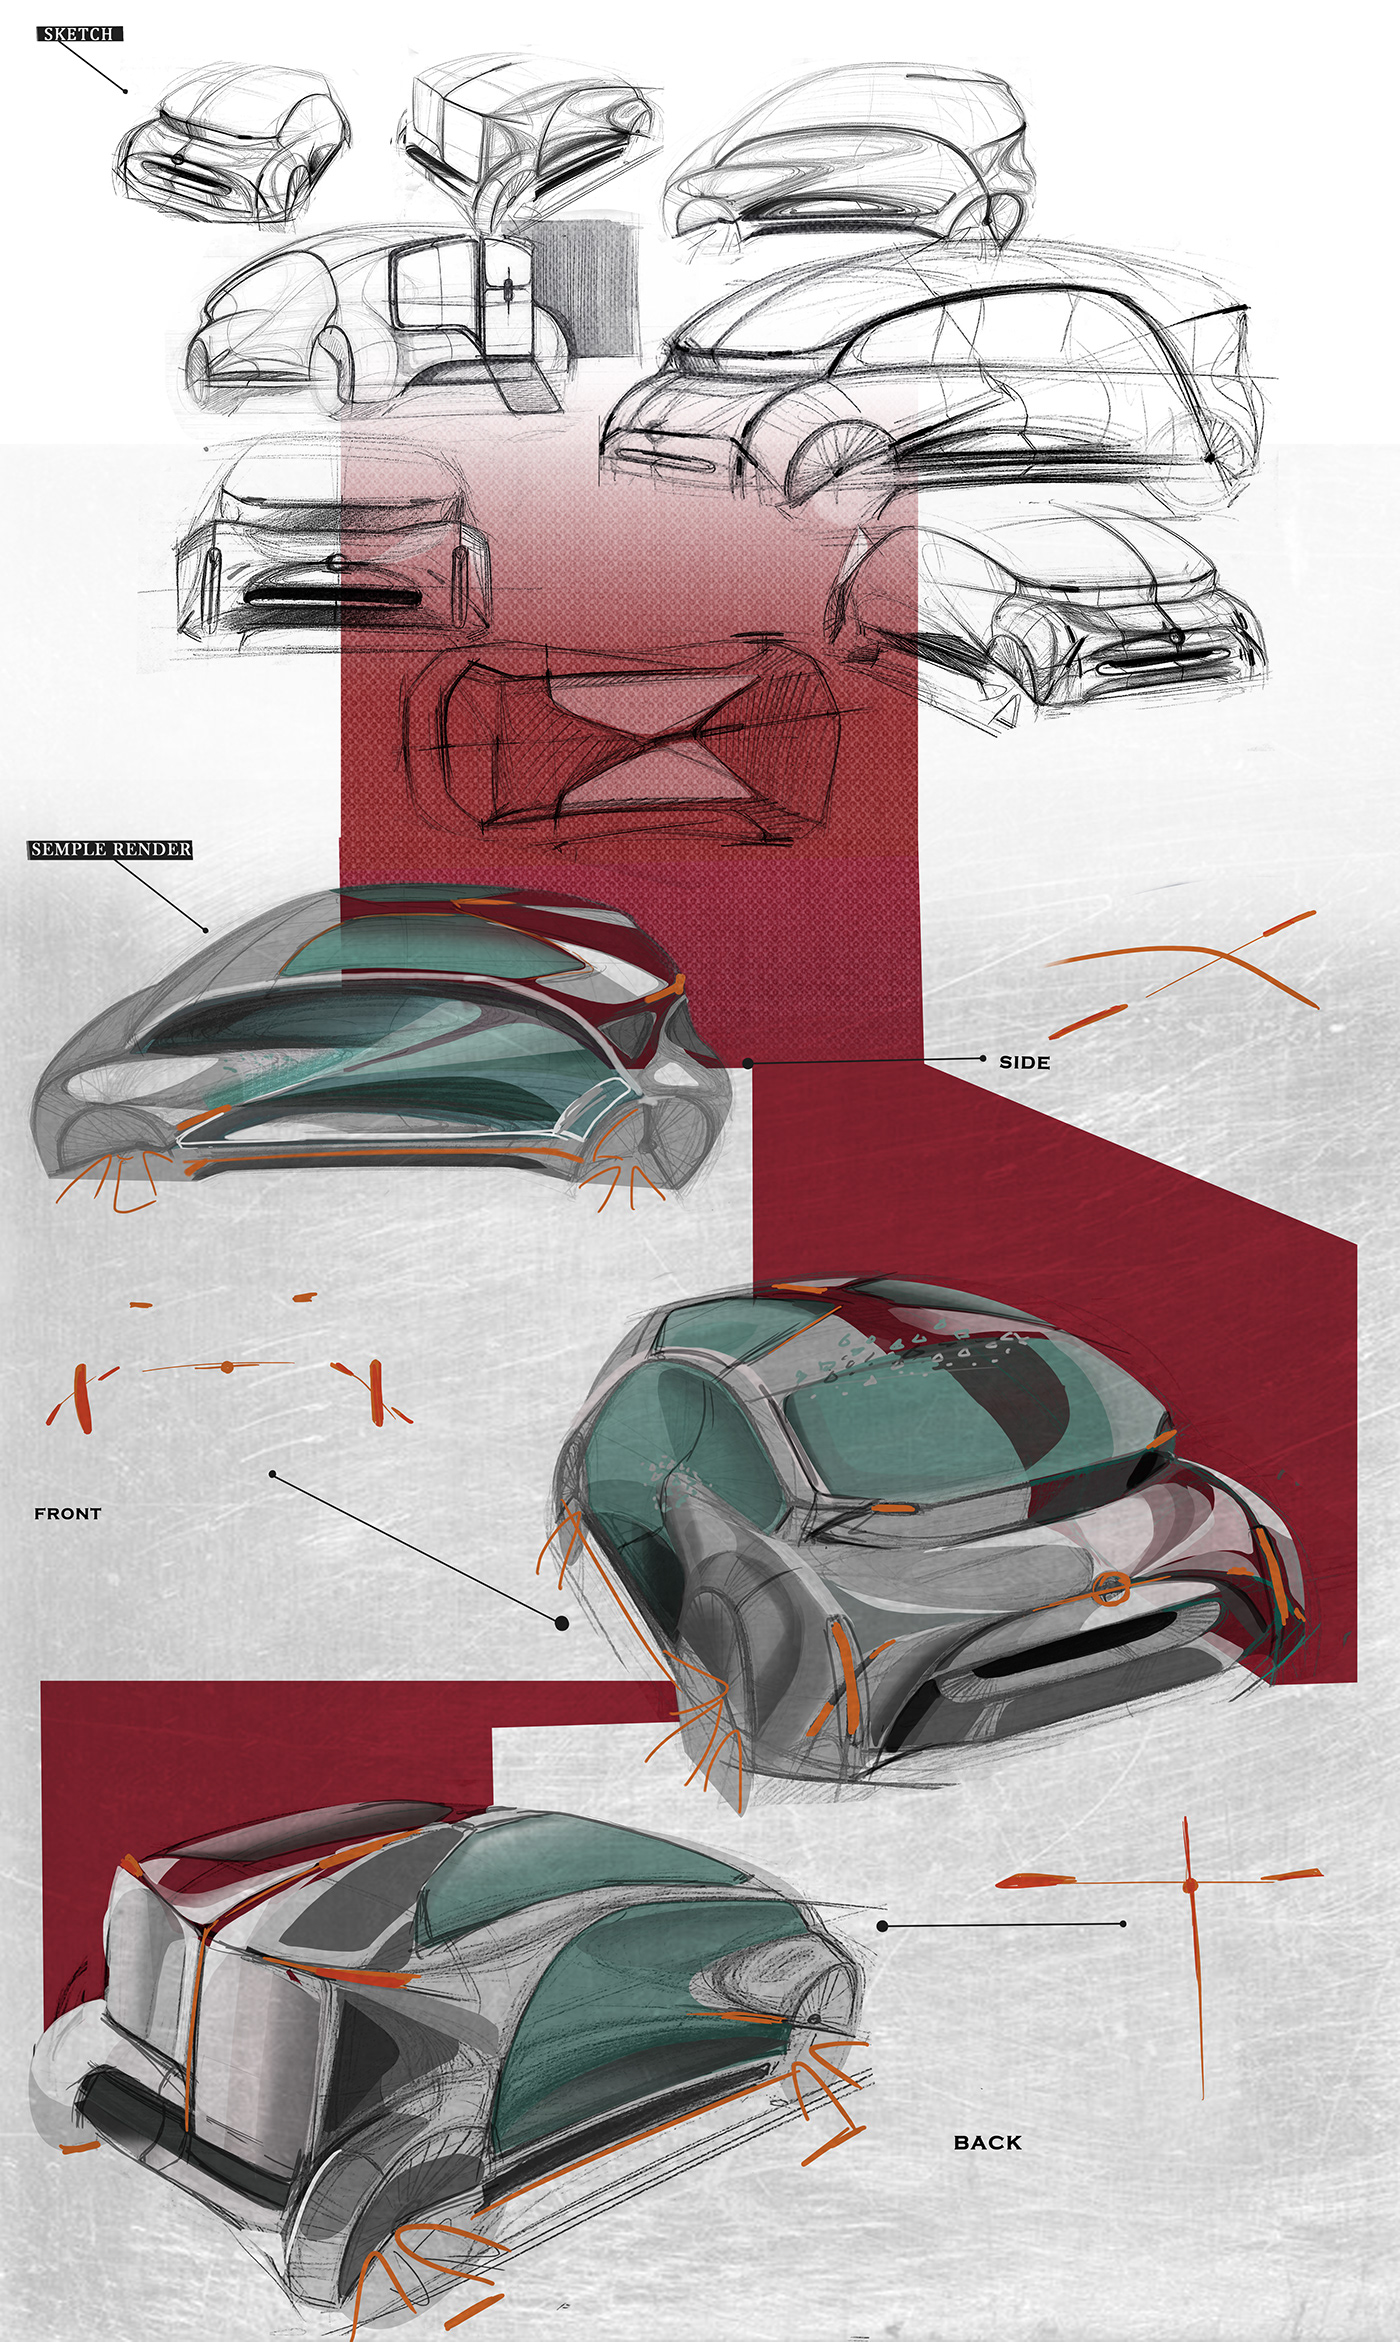 fiat cardesign MPV futurecar design ied Transportation Design familycar suv concept car